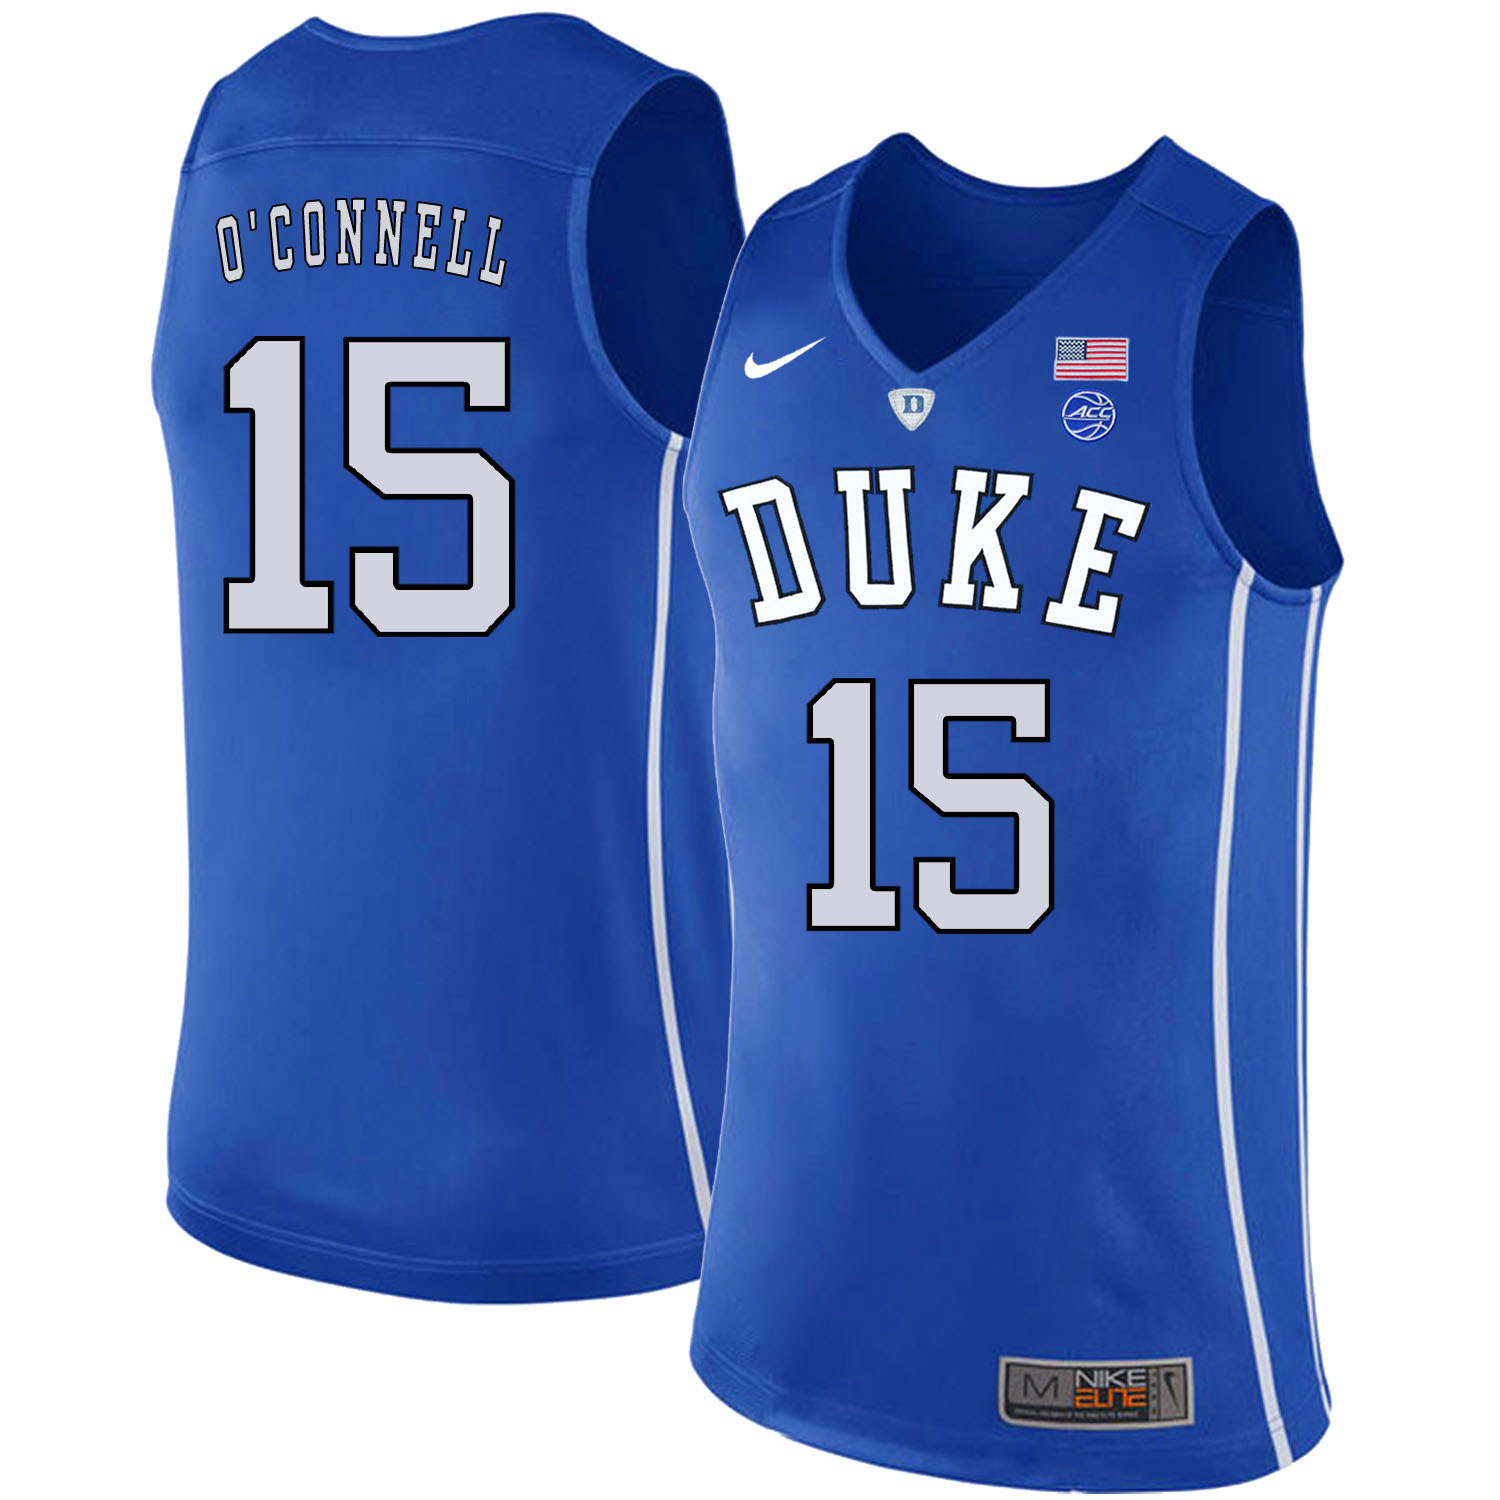 Duke Blue Devils 15 Alex O'Connell Blue Nike College Basketball Jersey